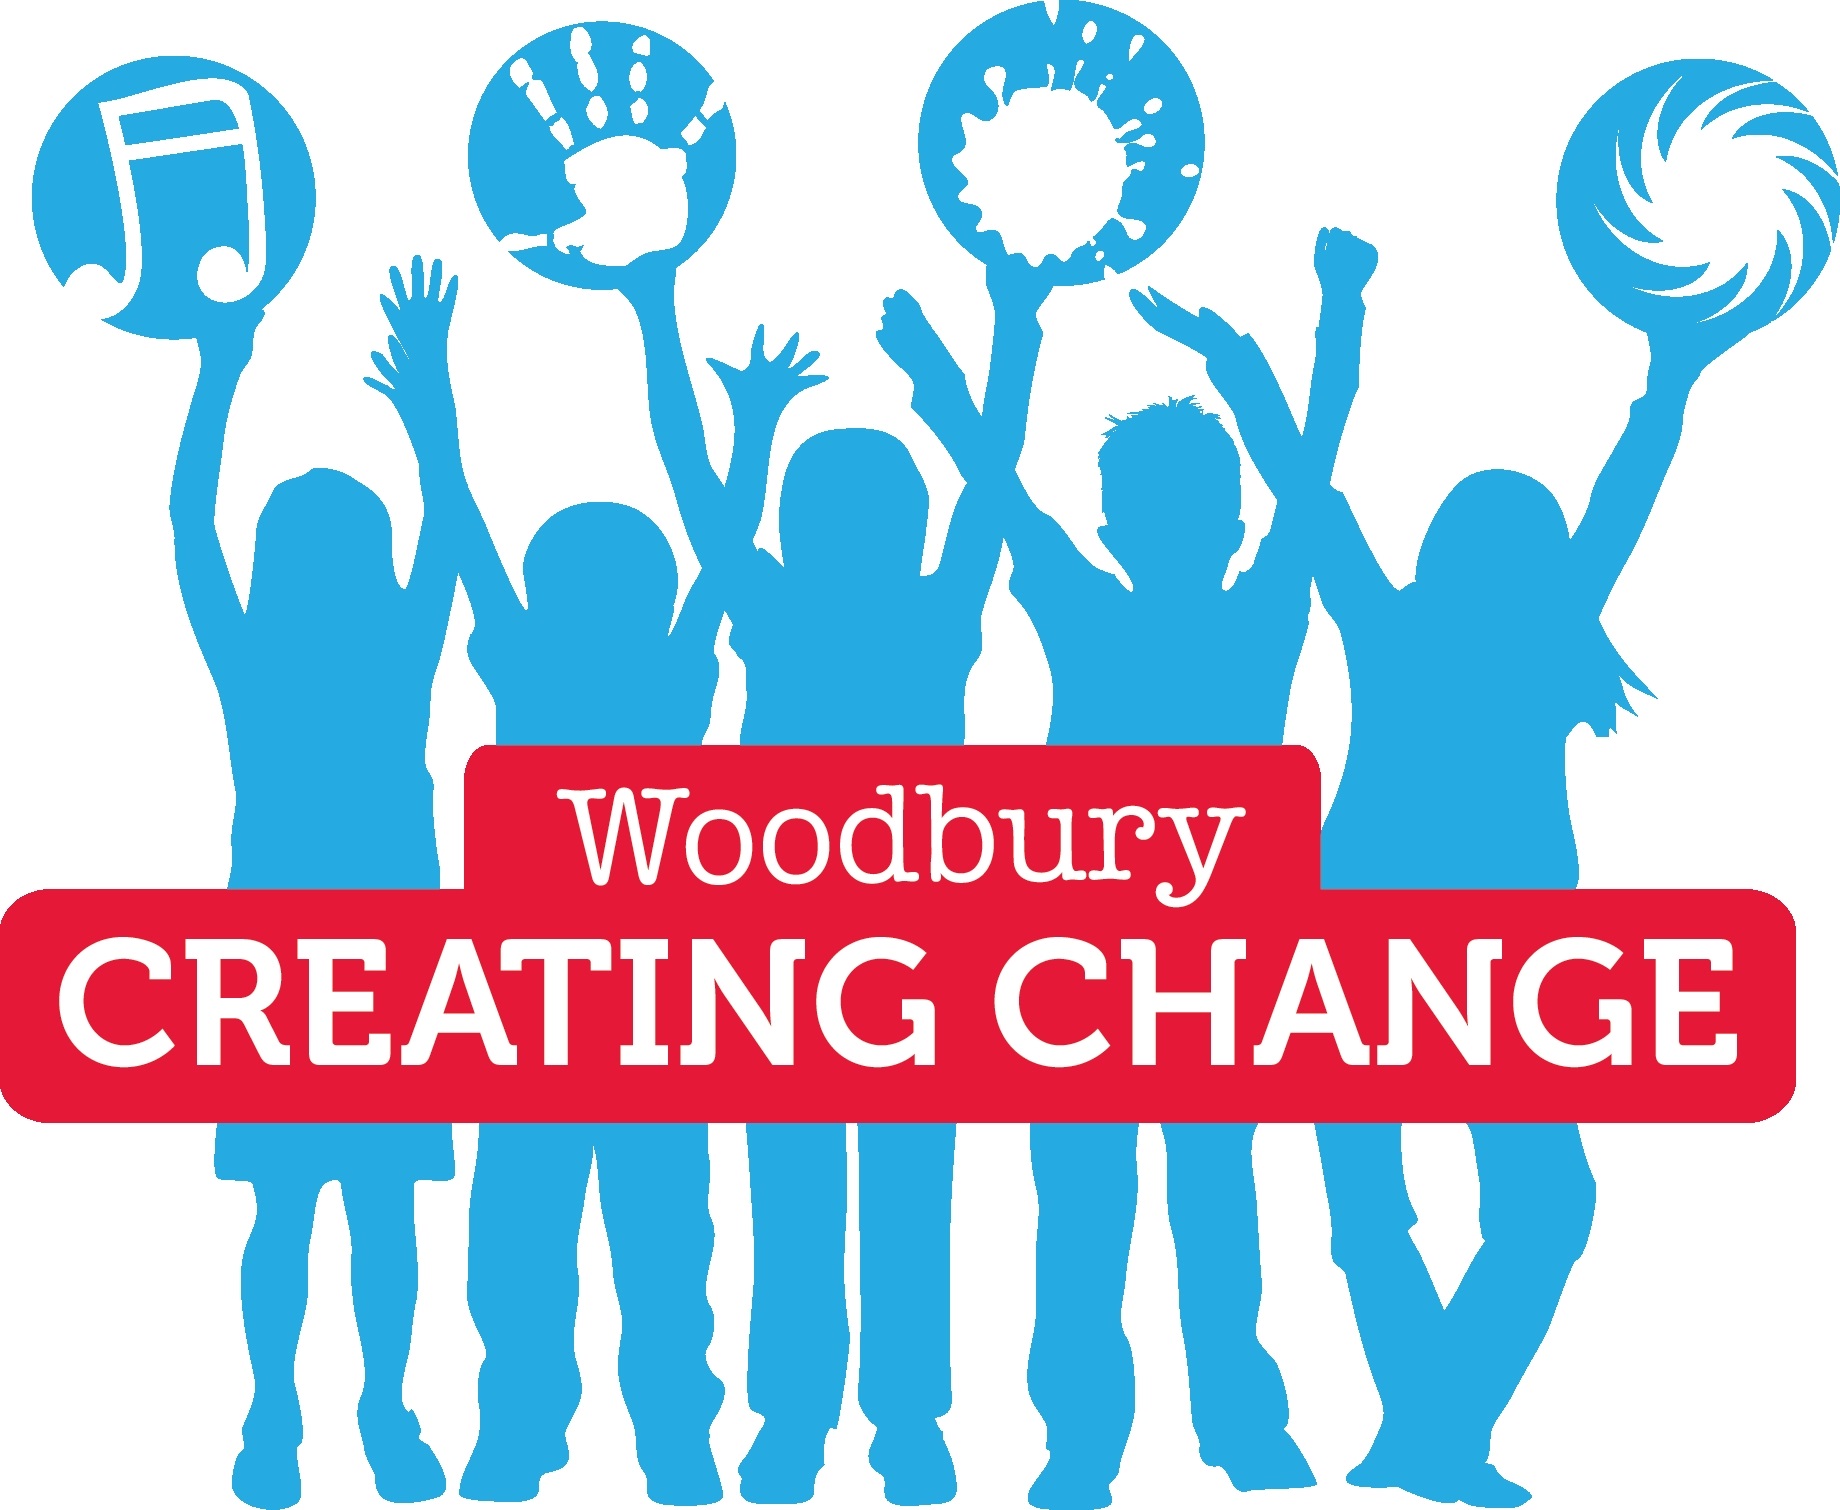 woodbury creating change logo